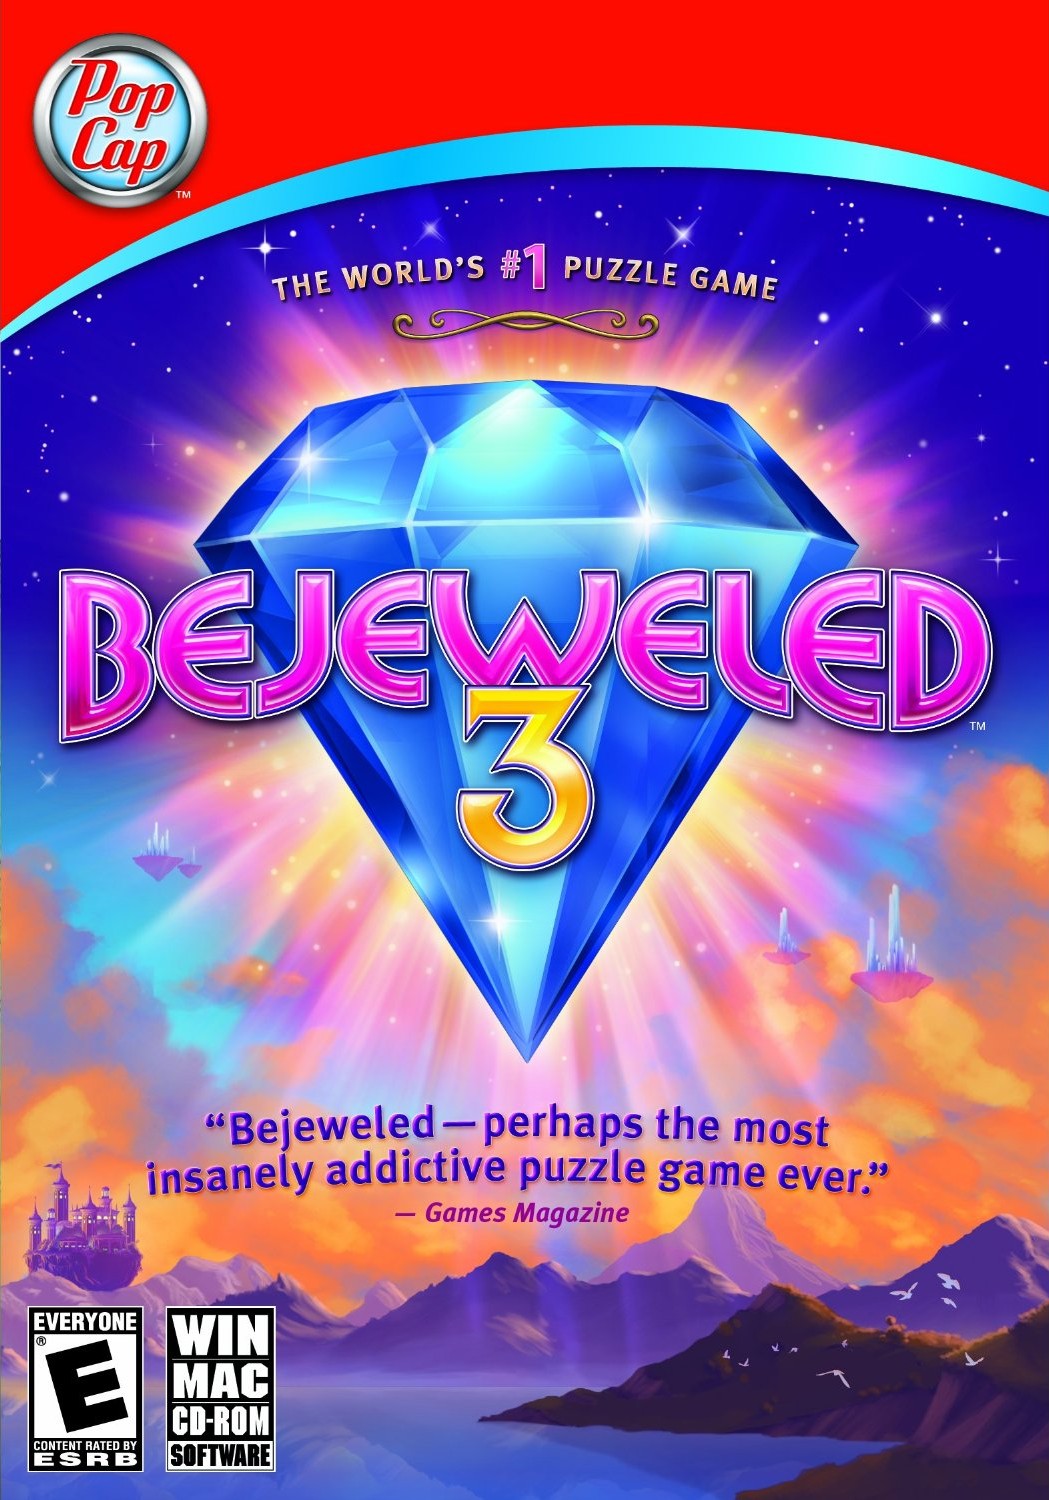 msn games bejeweled 3 free online